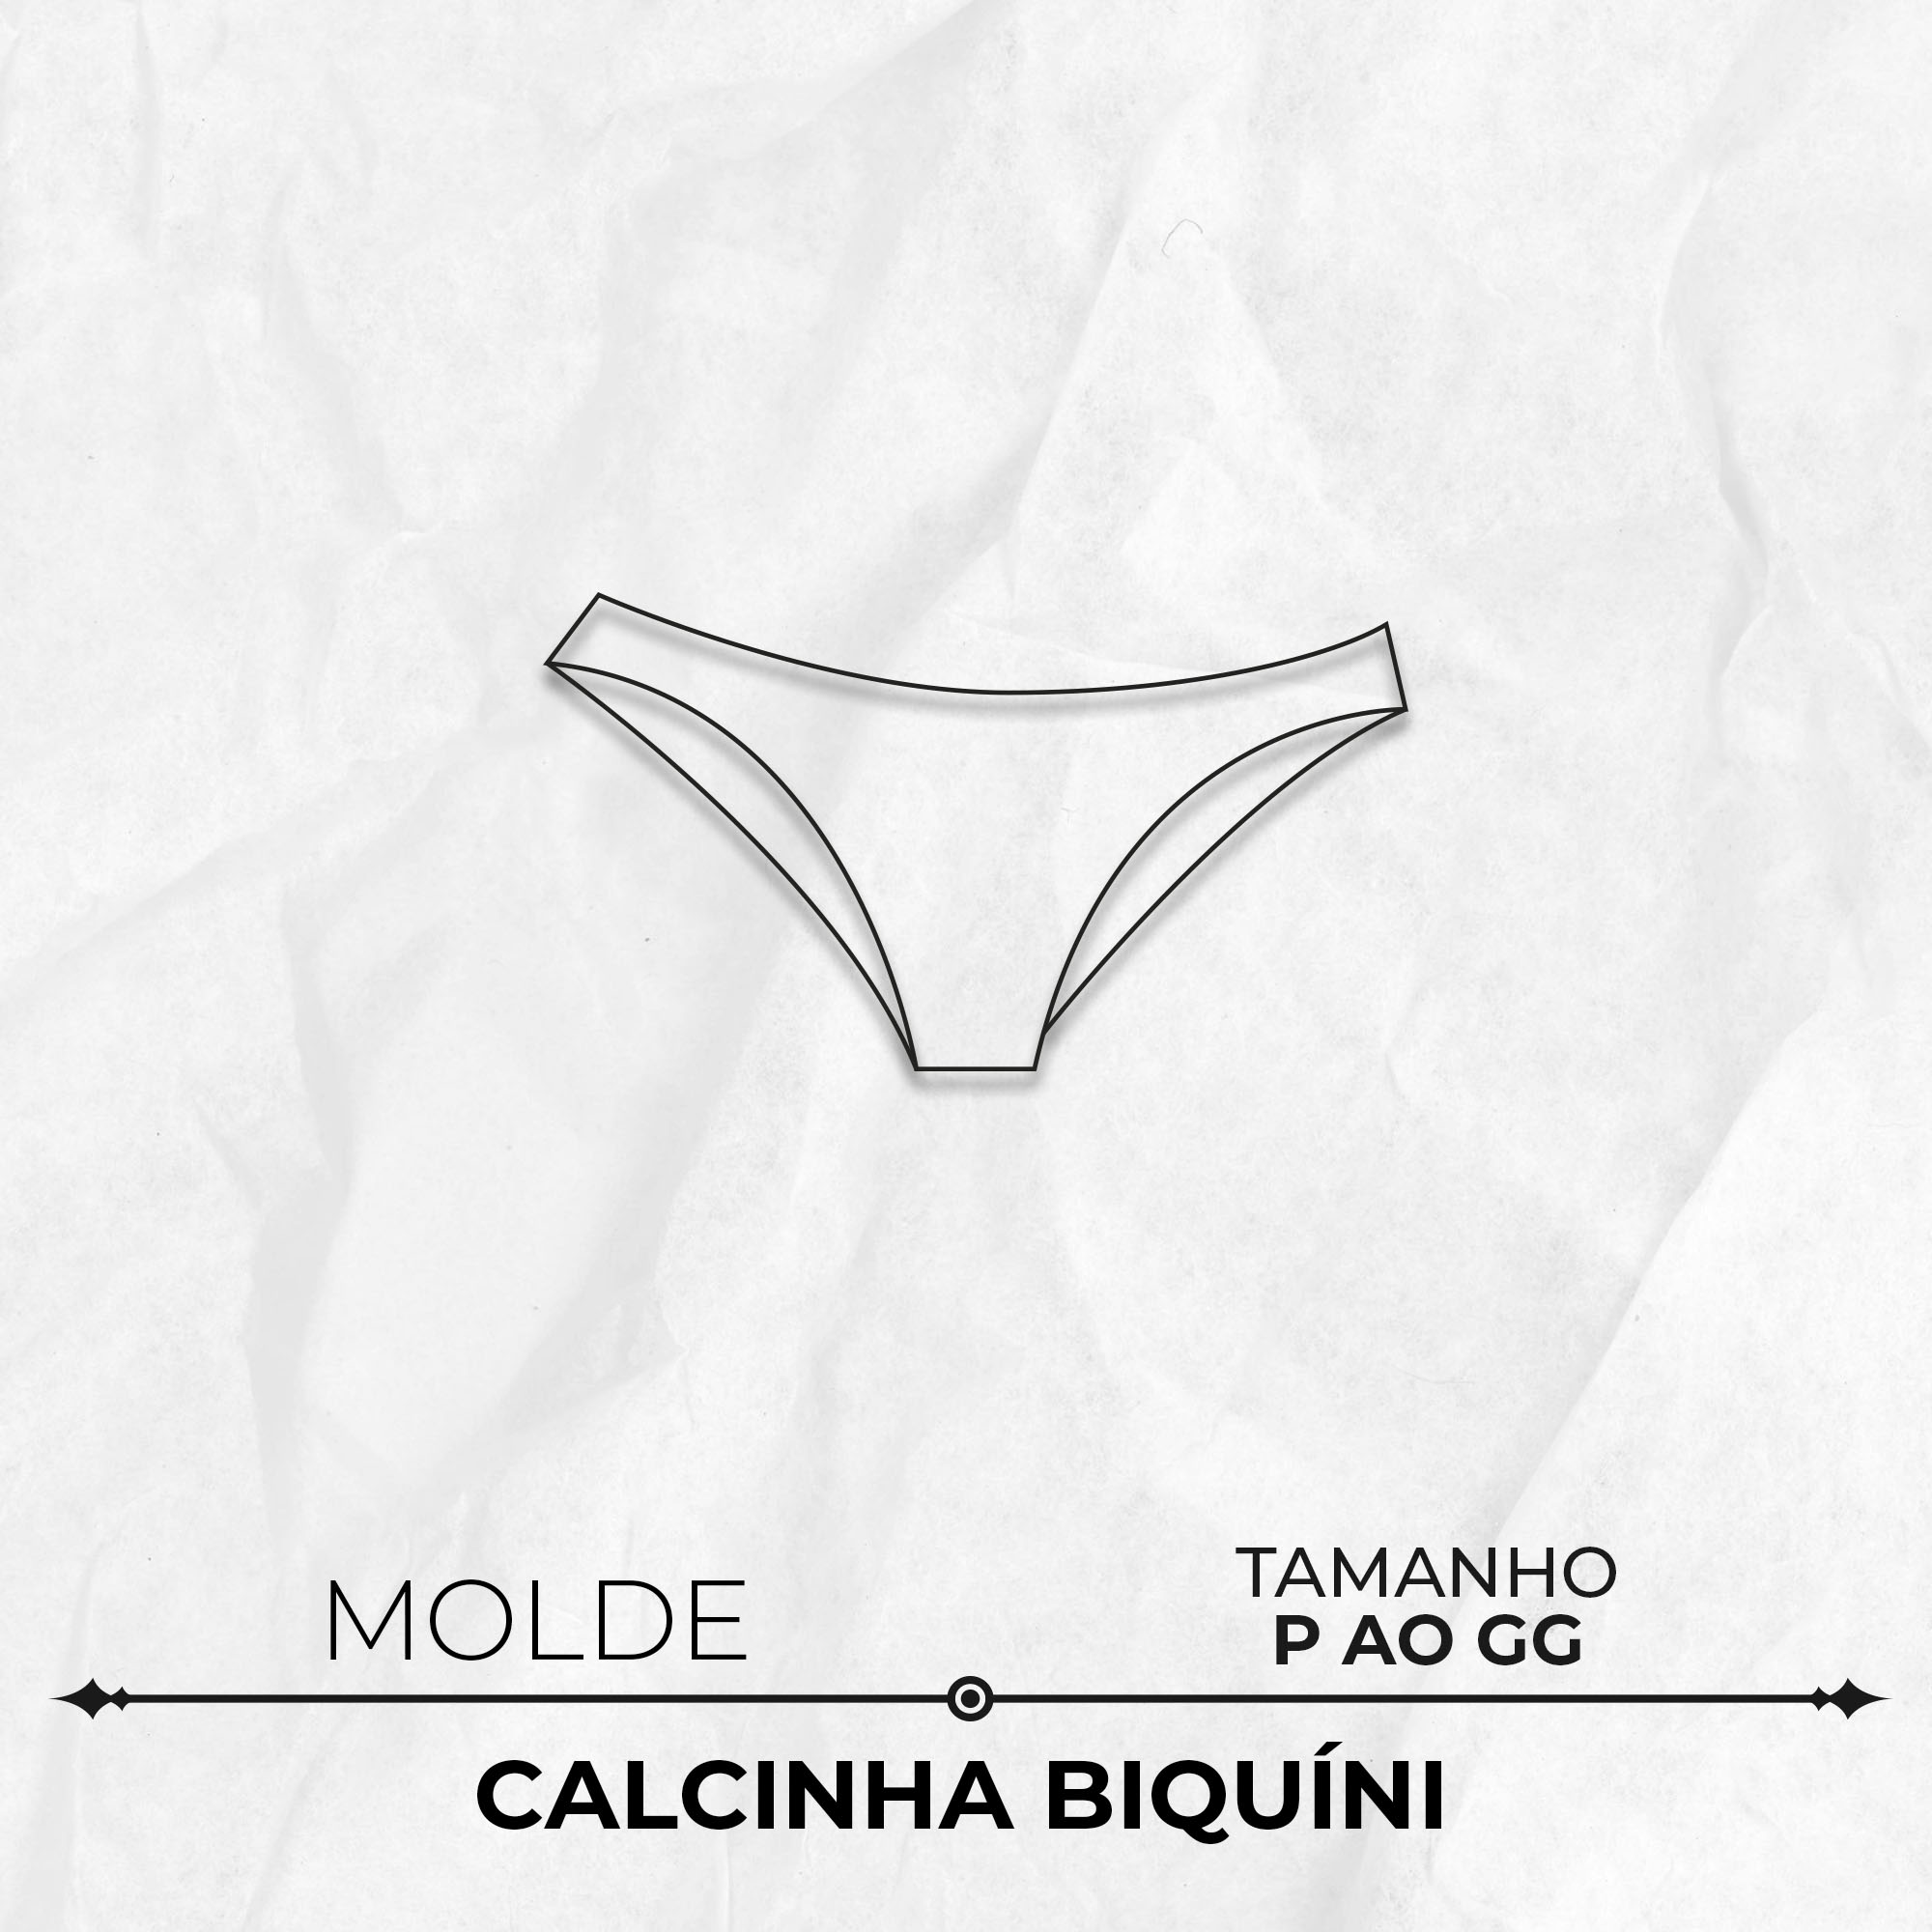 Molde-lingerie-calcinha-biquini-by-Marlene-Mukai